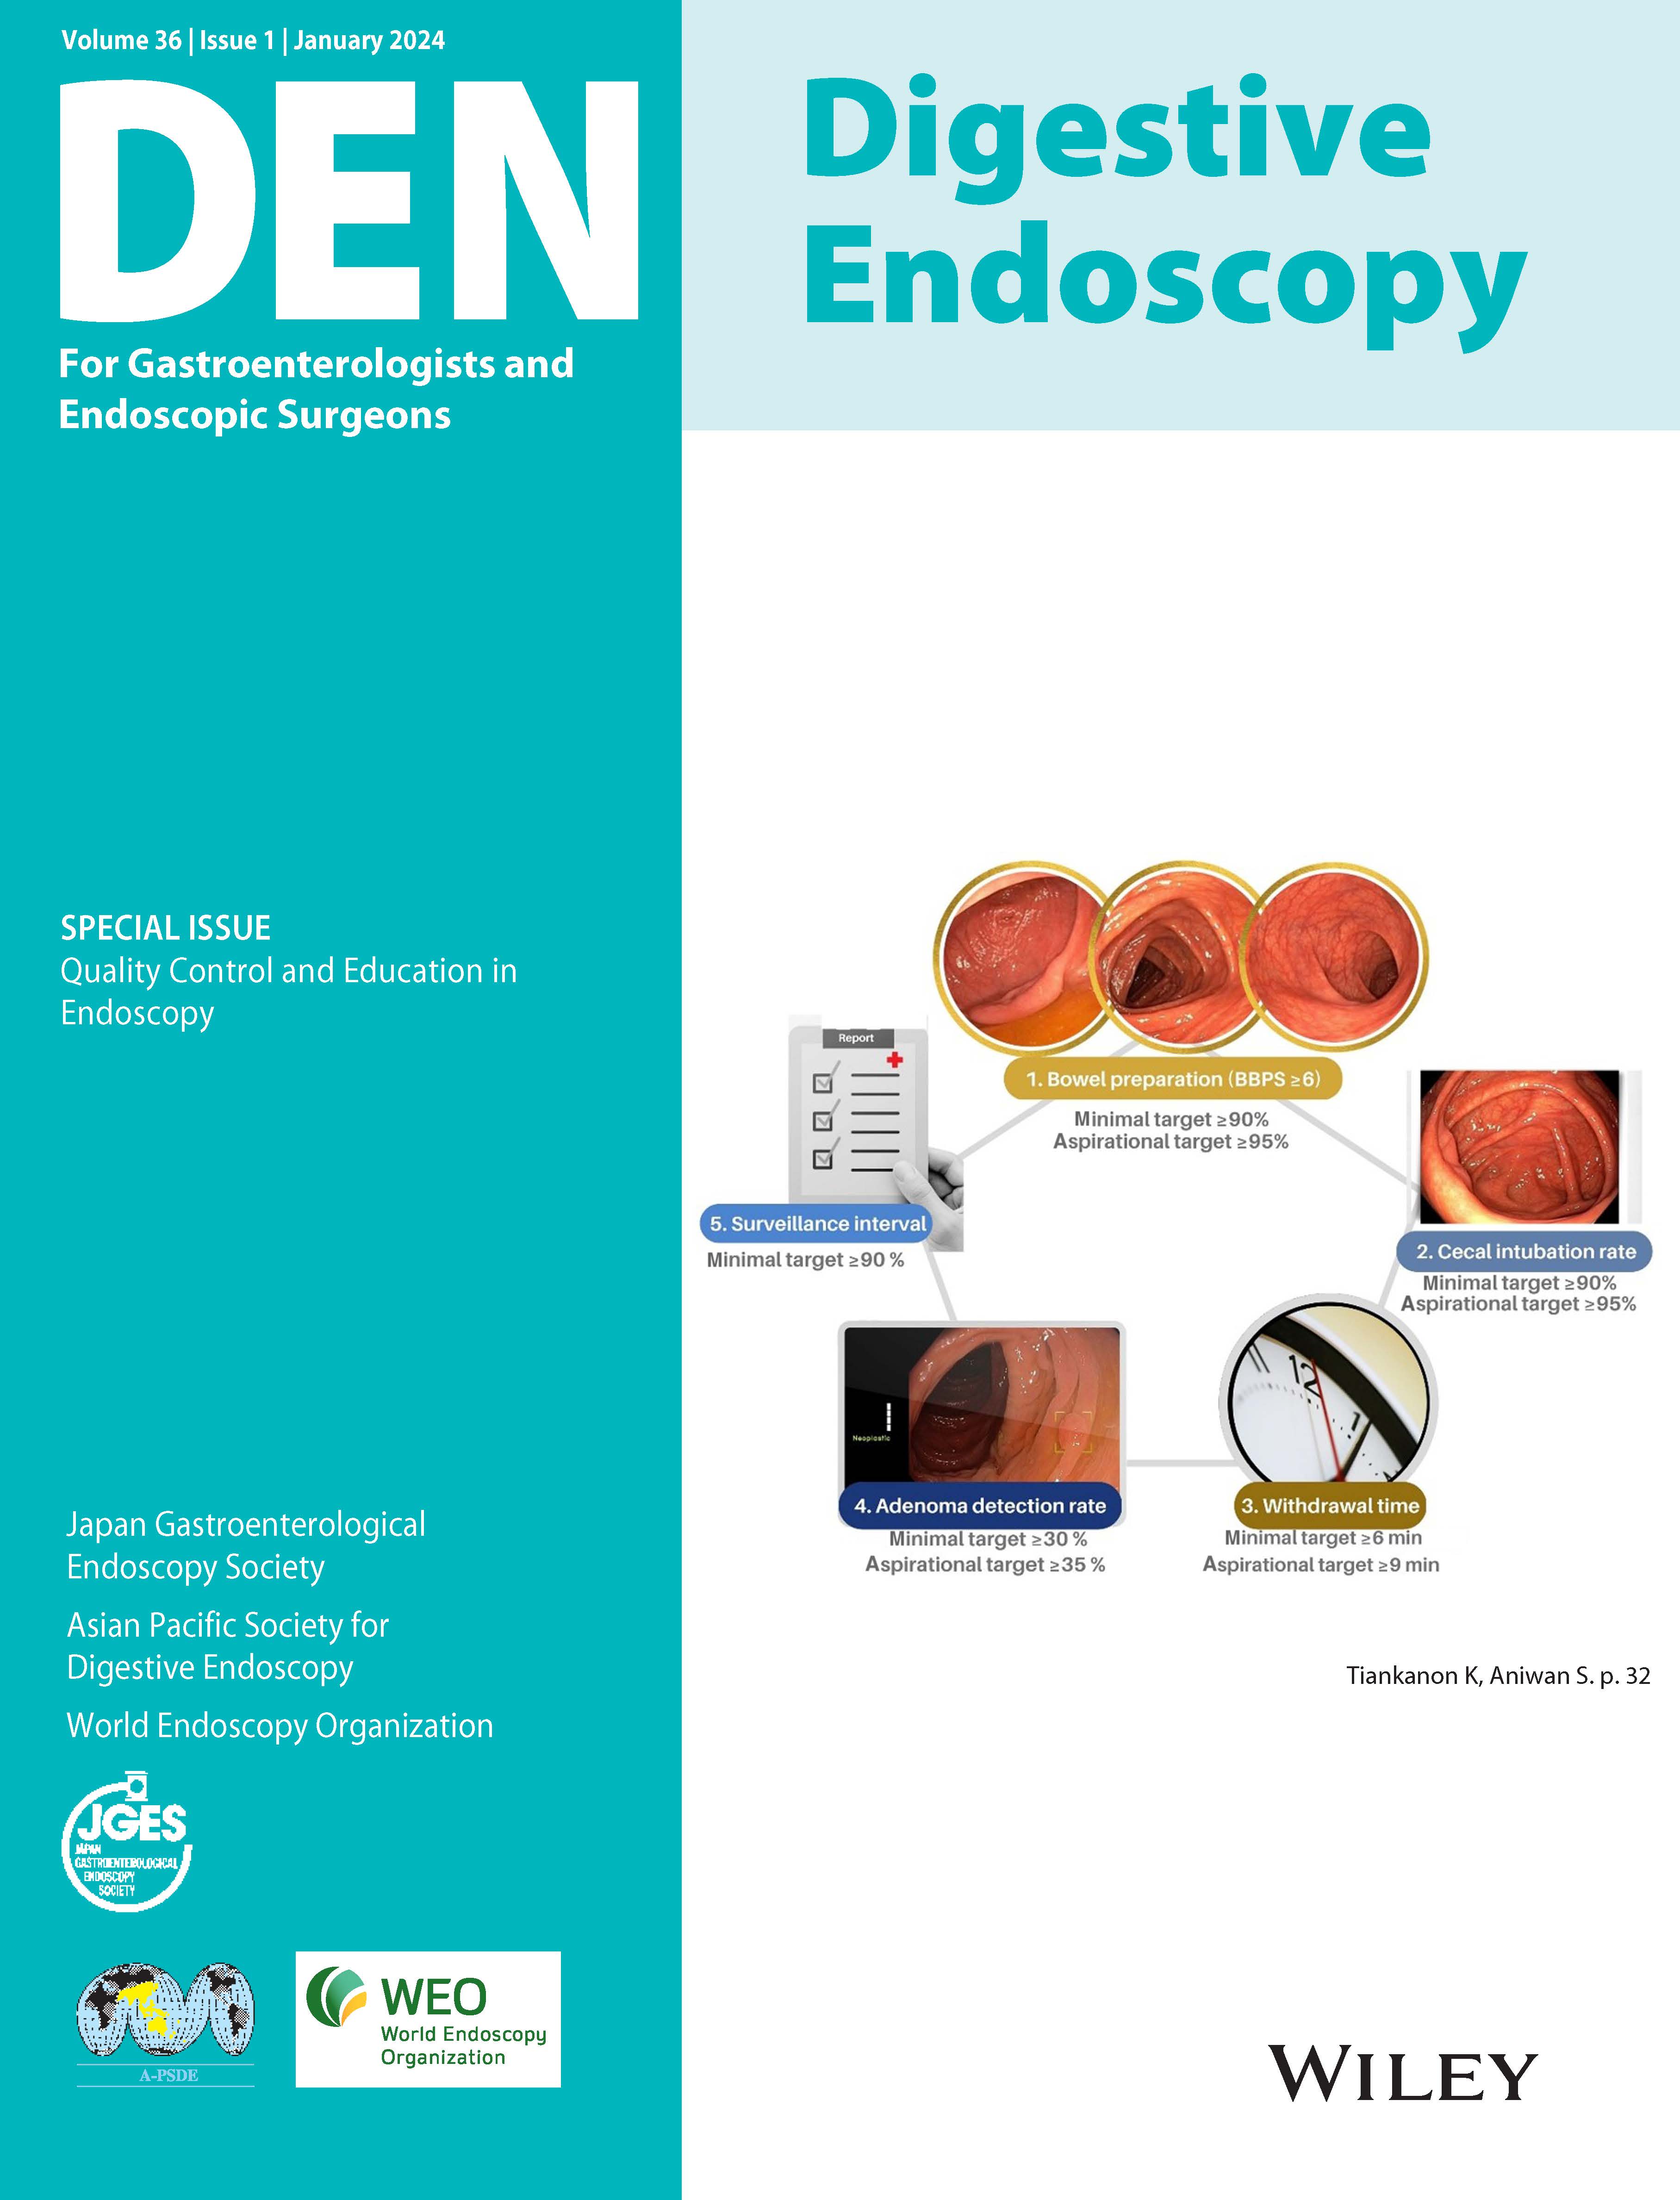 Digestive Endoscopy Vol36-1